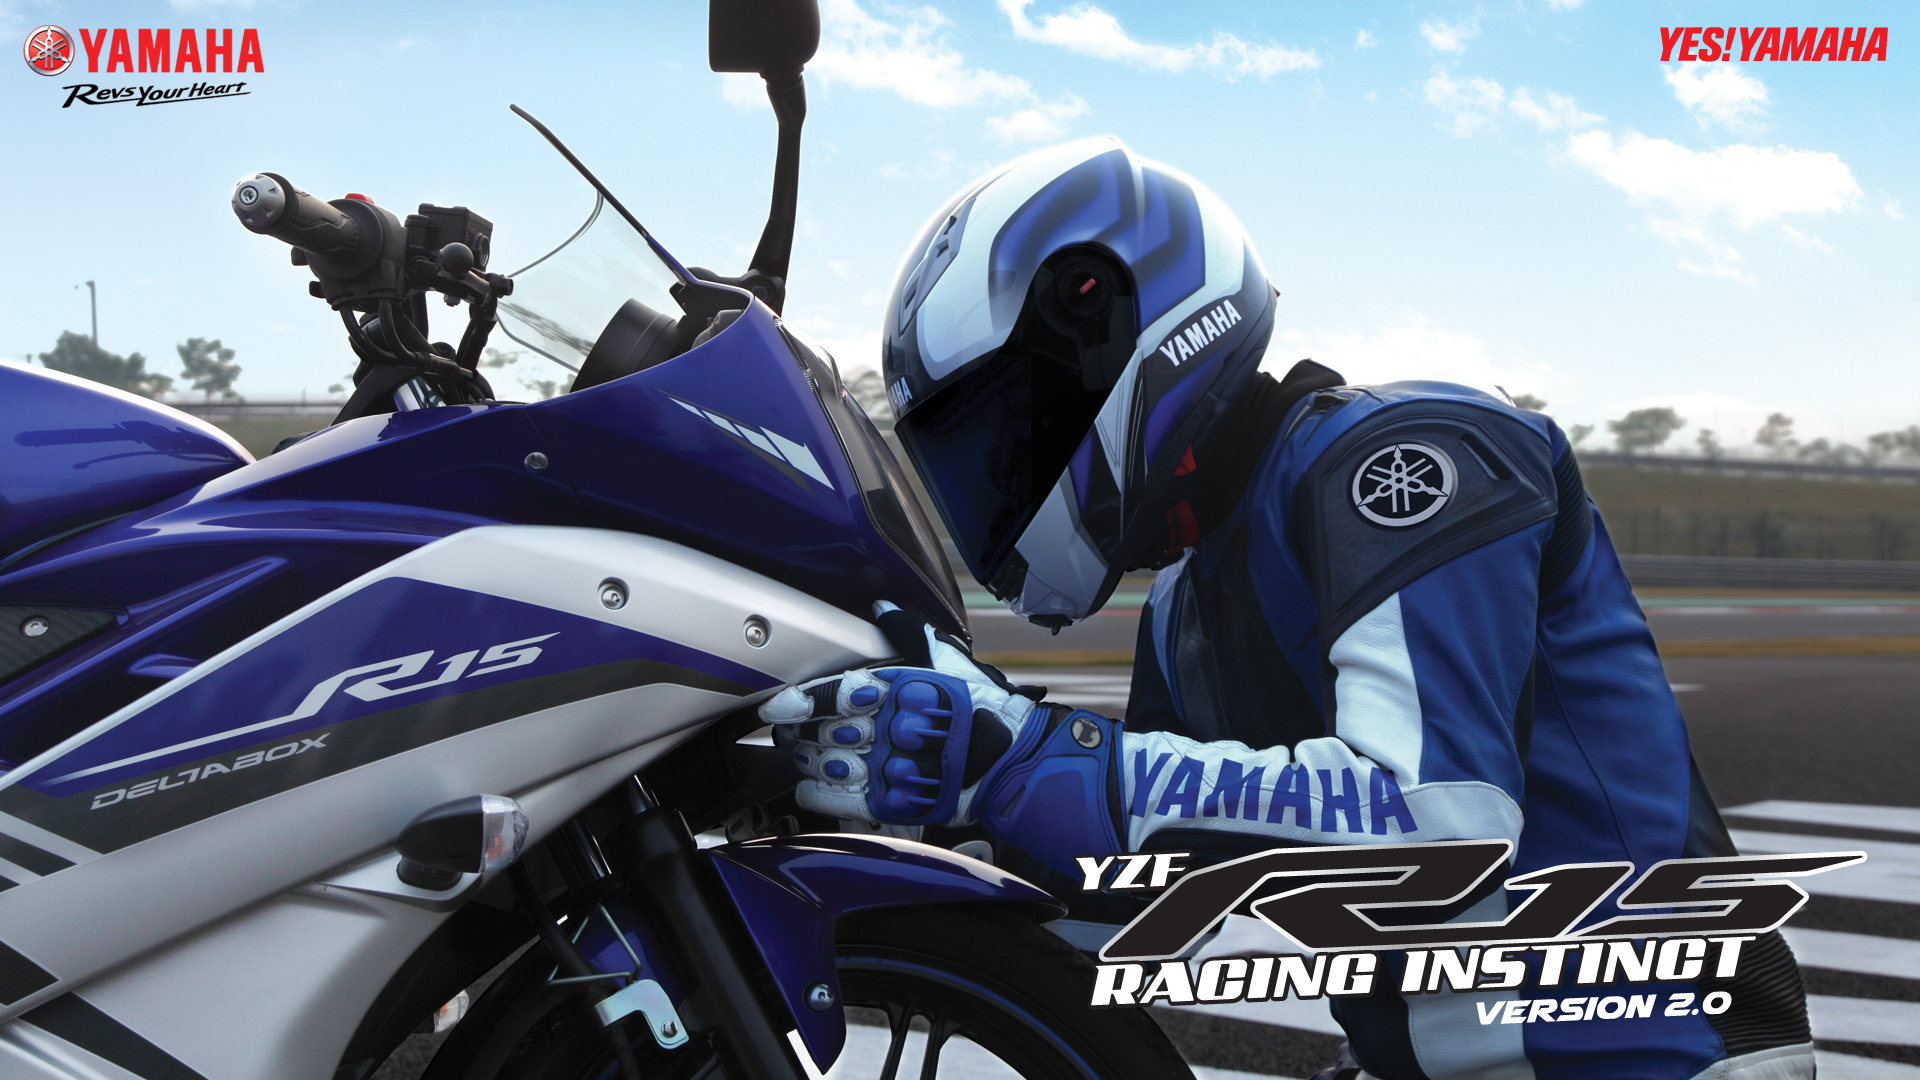 New R15 Image - Blue Yamaha R15 V2 Hd Wallpapers 1080p - 1920x1080 Wallpaper  